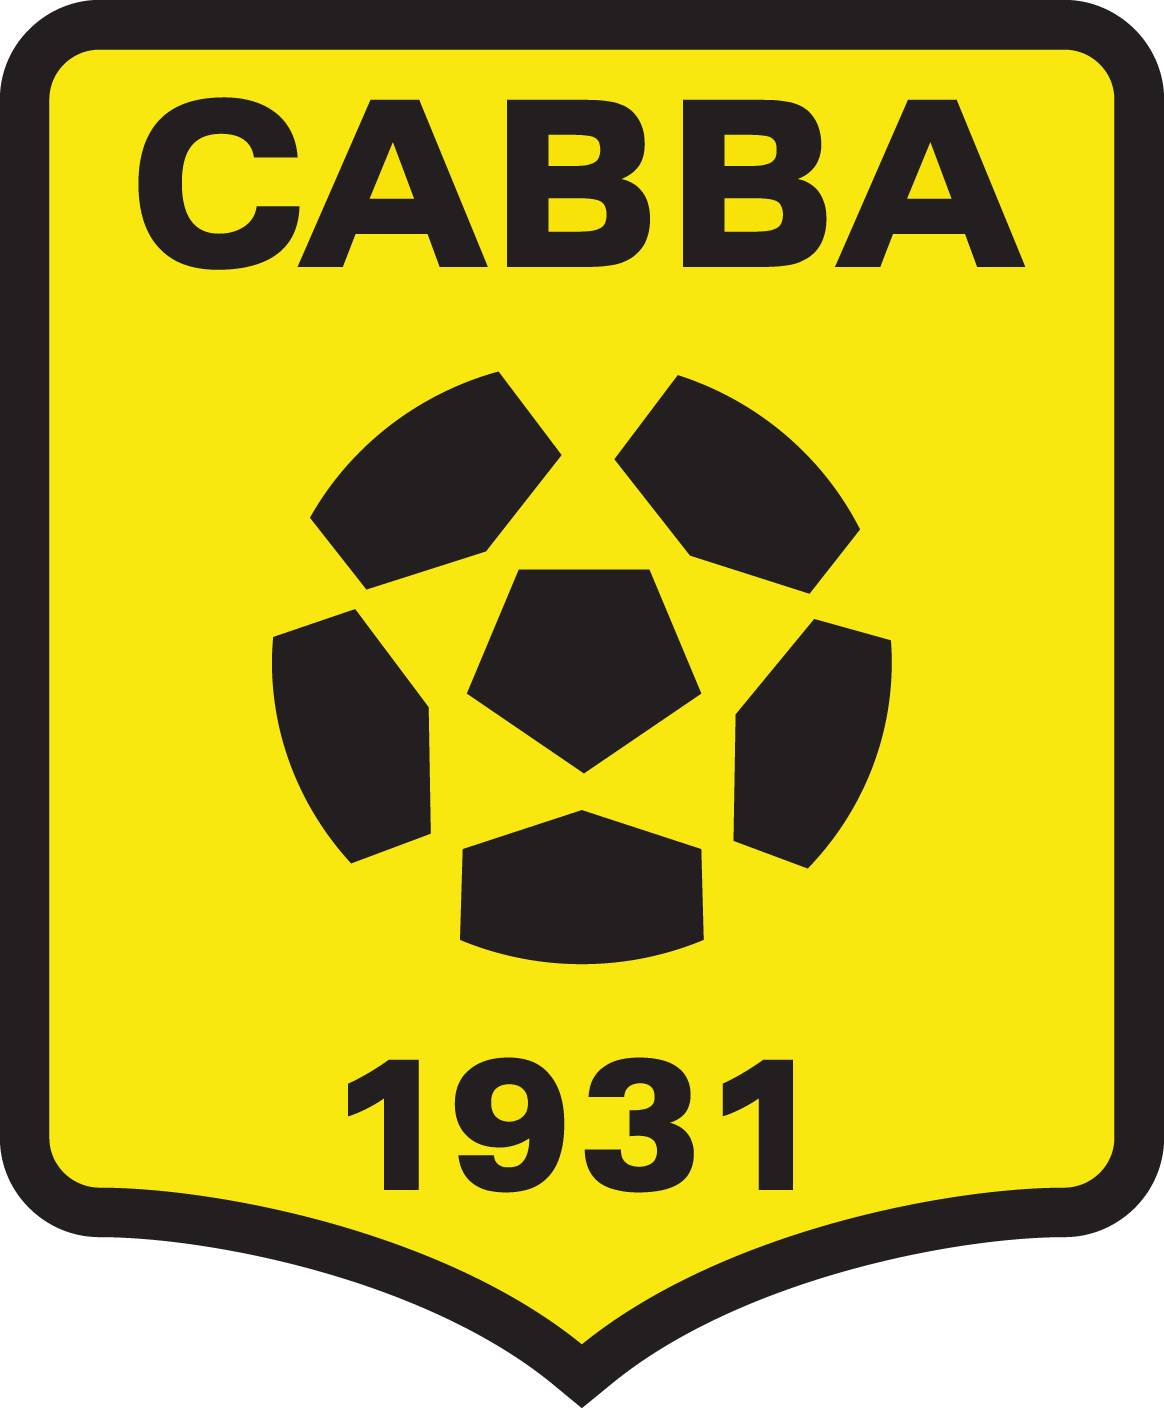 CABB Arreridj logo